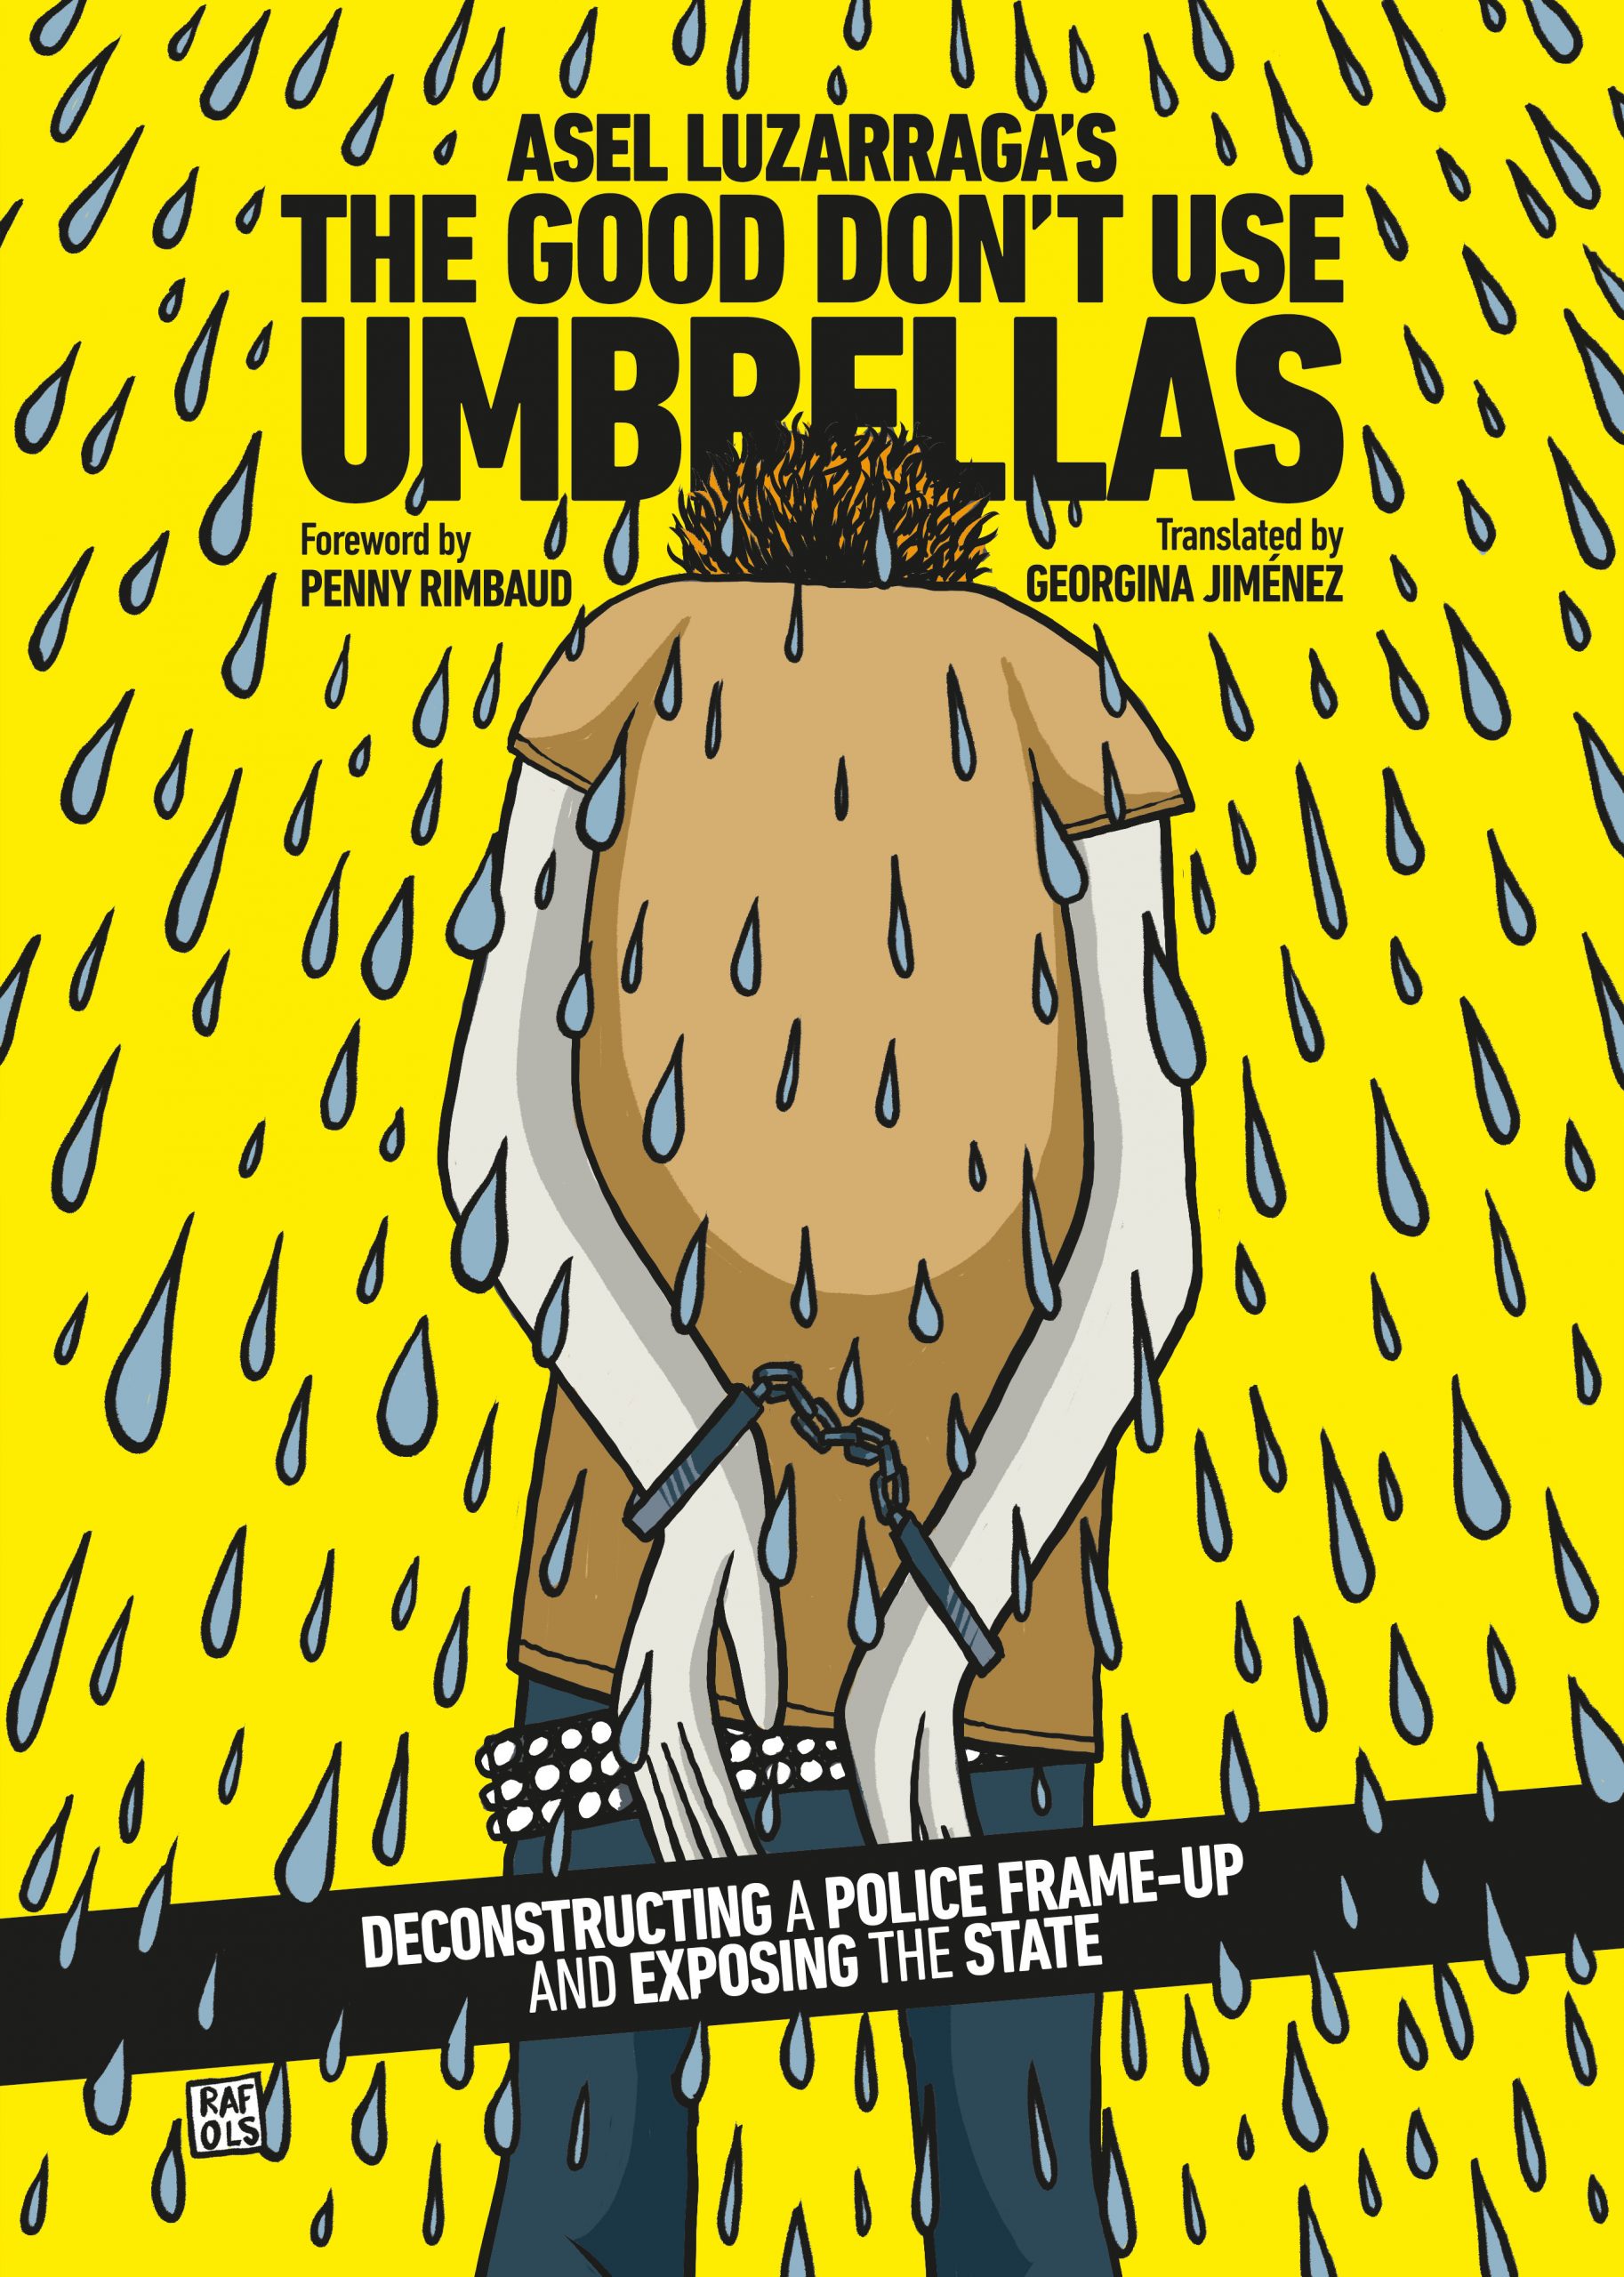 The good don't use umbrella (Los buenos no usan paraguas)